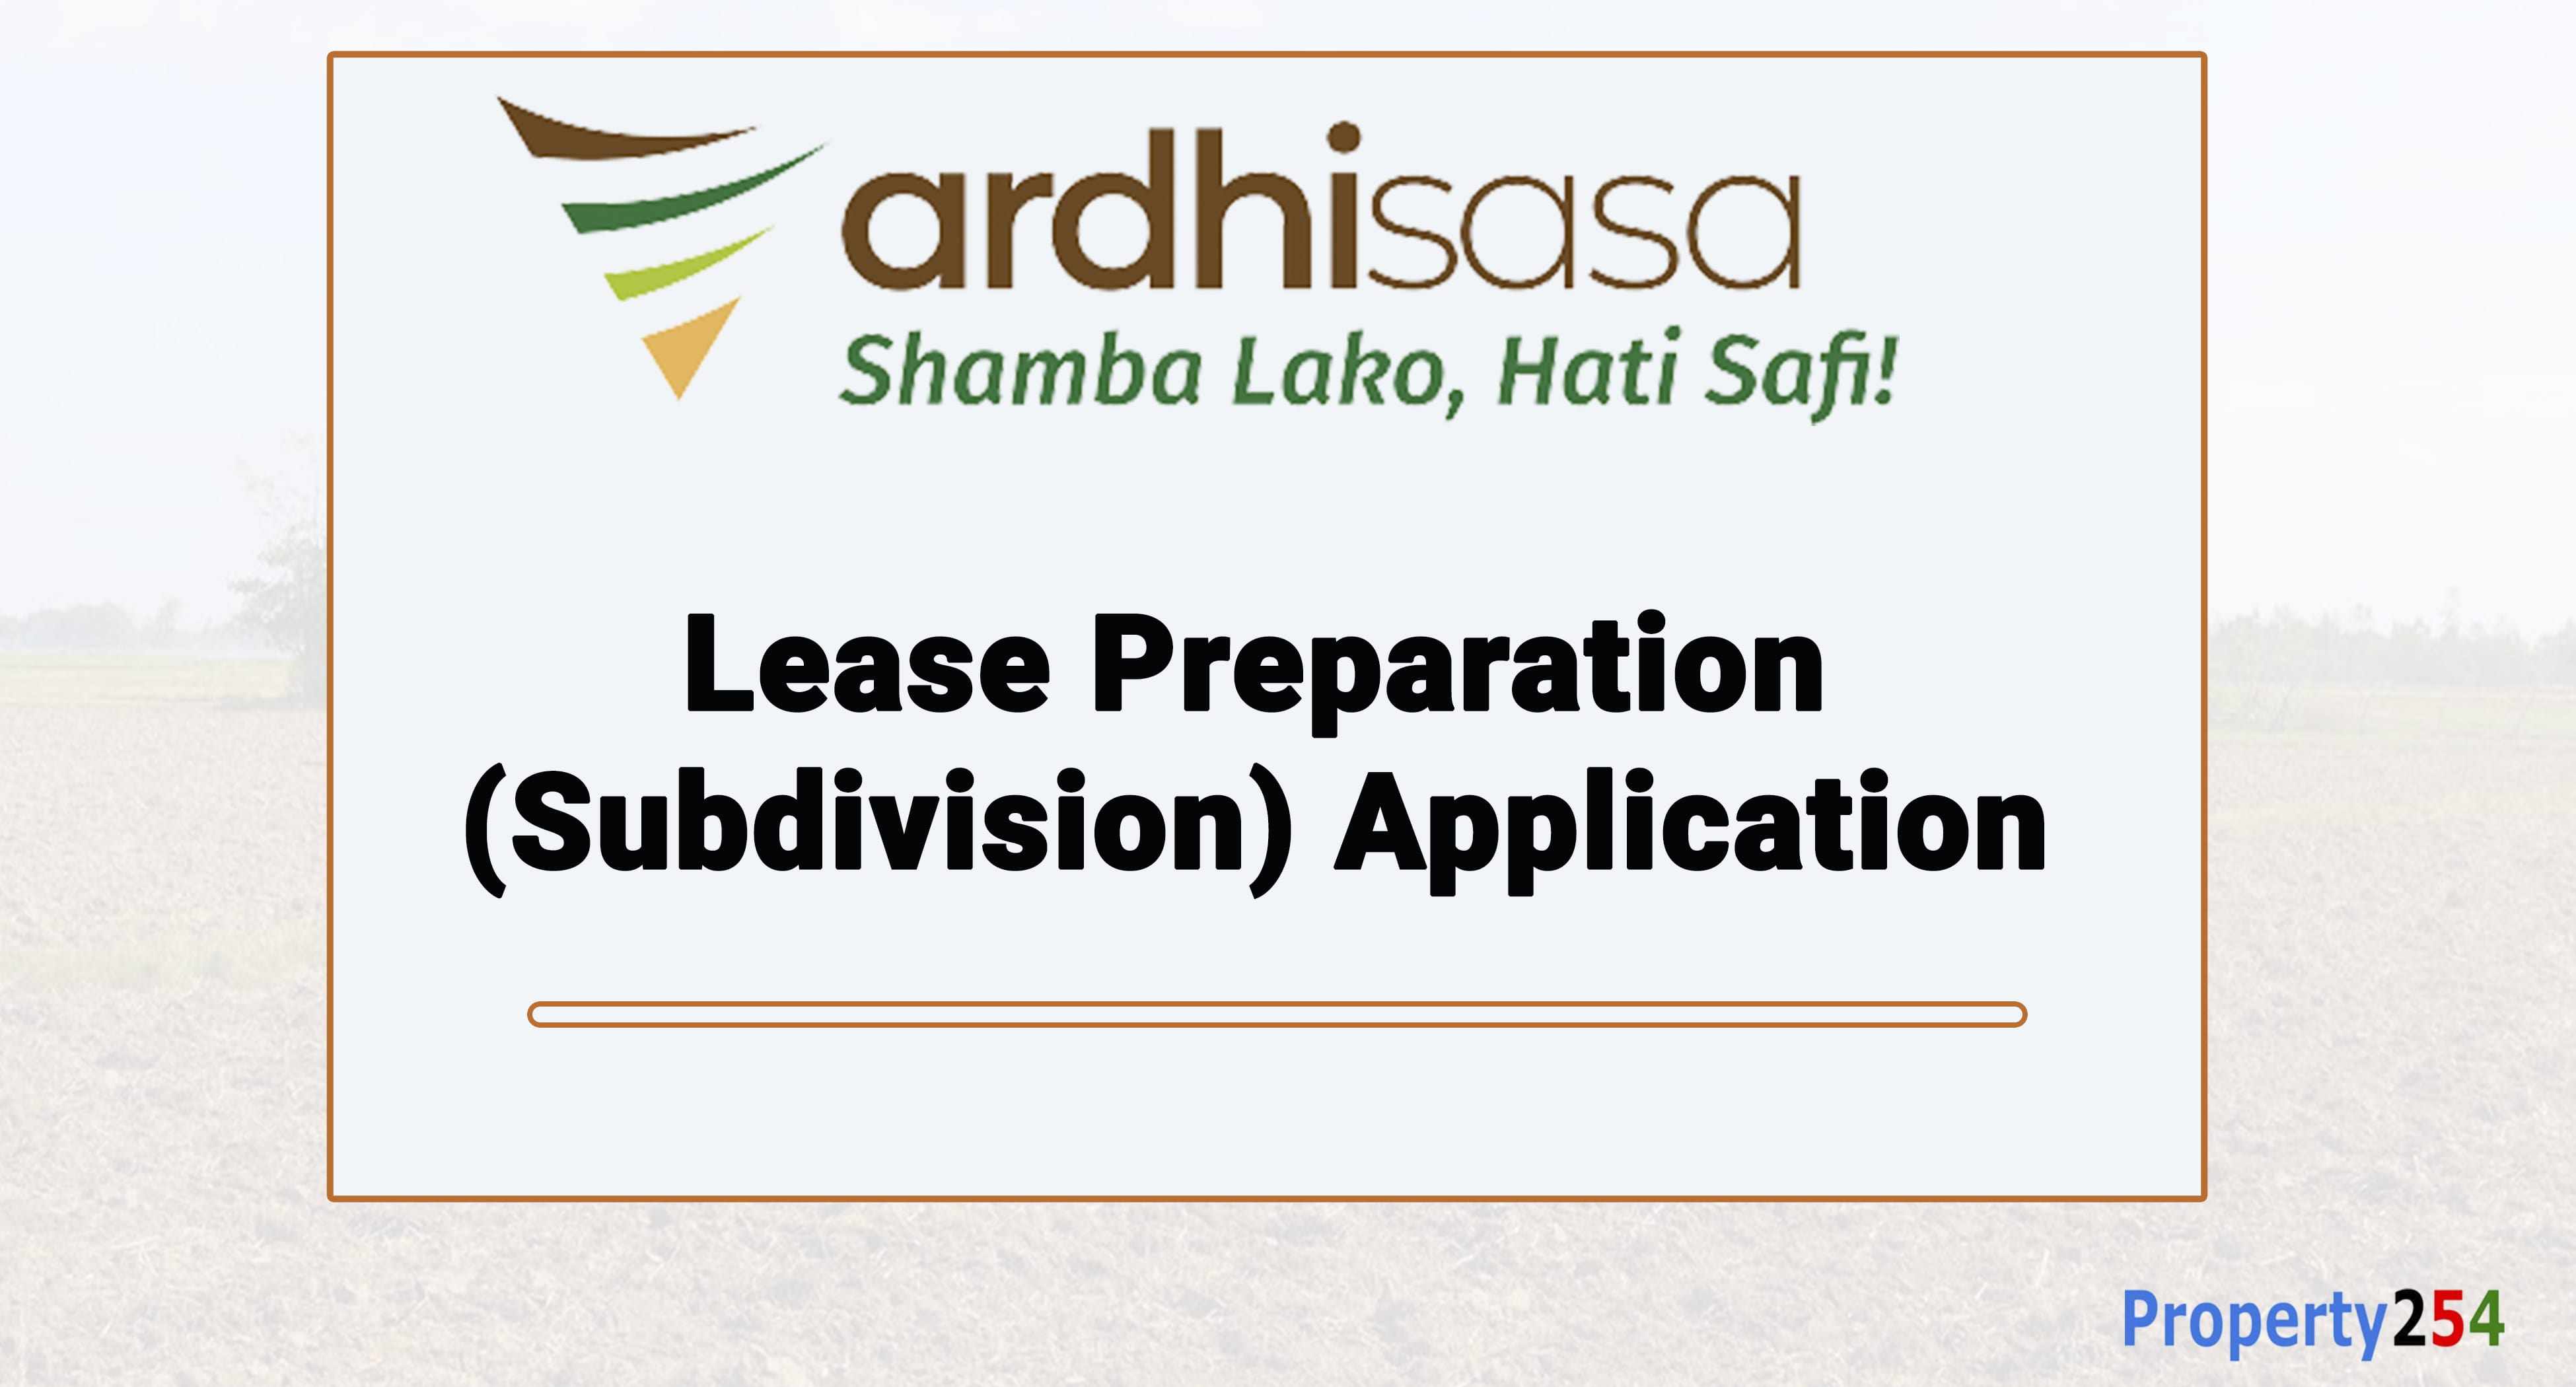 Lease Preparation (Subdivision) Application Process on Ardhisasa thumbnail